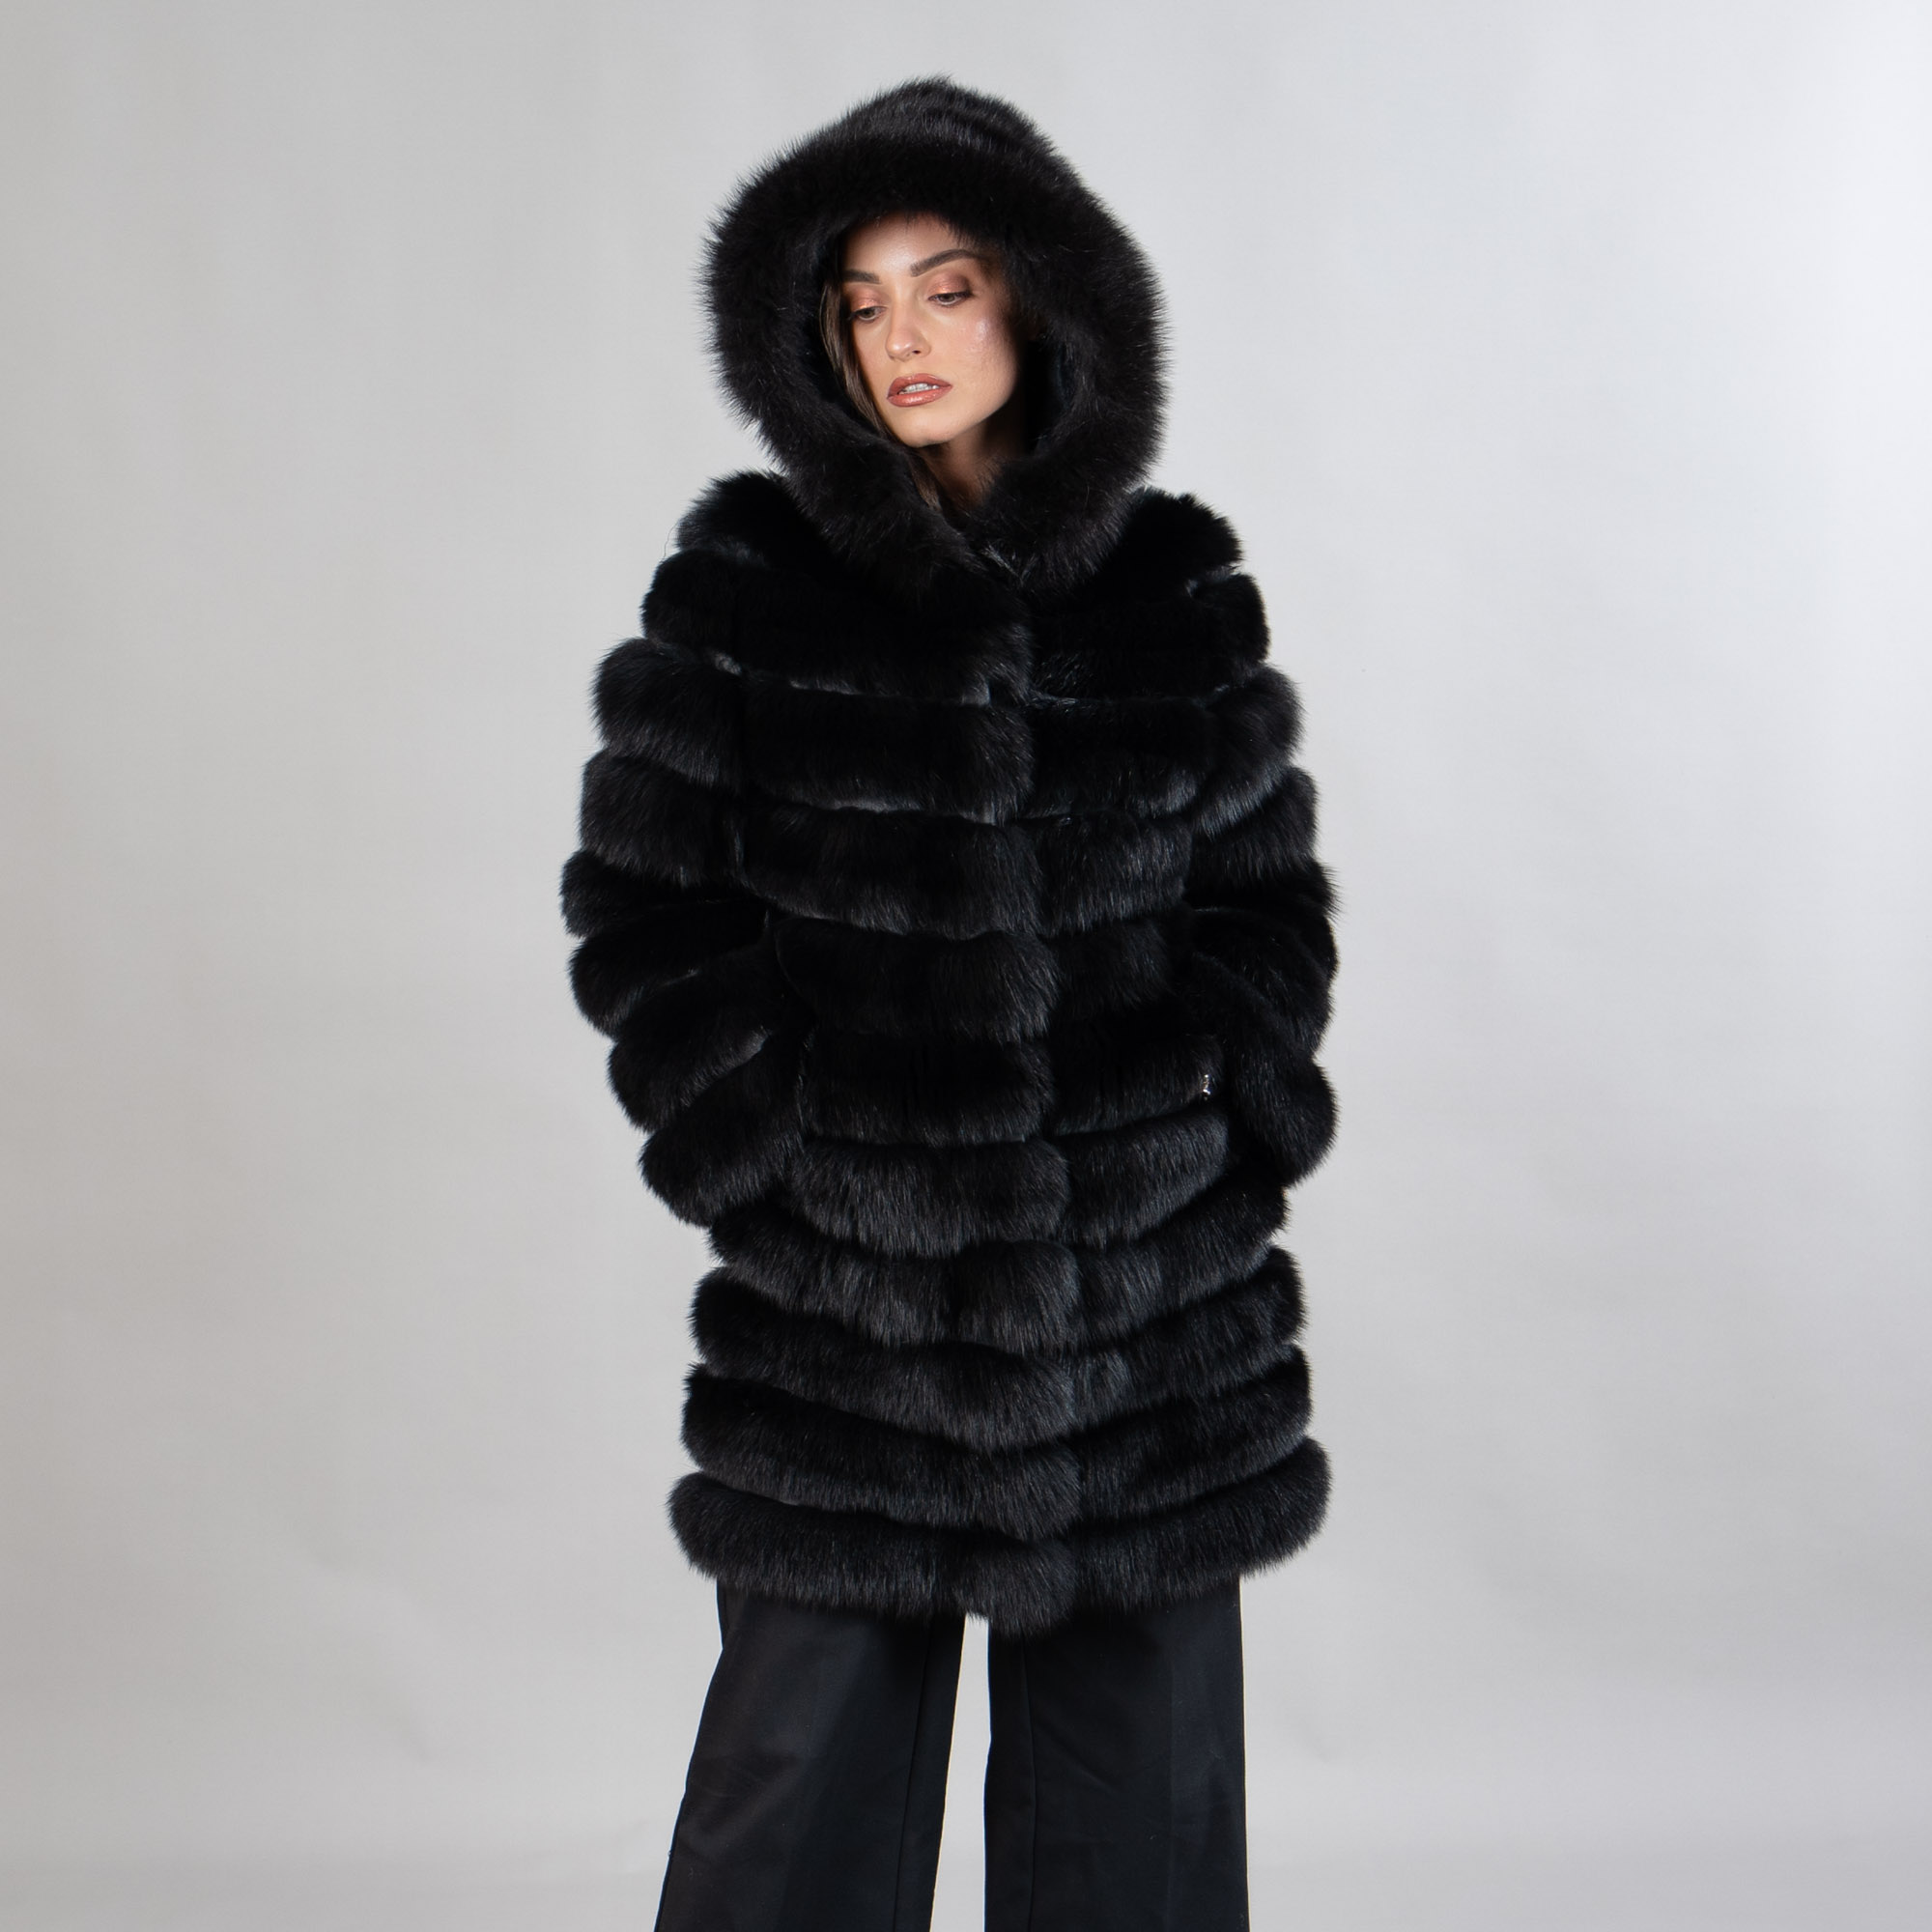 Fox fur polymorphic coat in black color